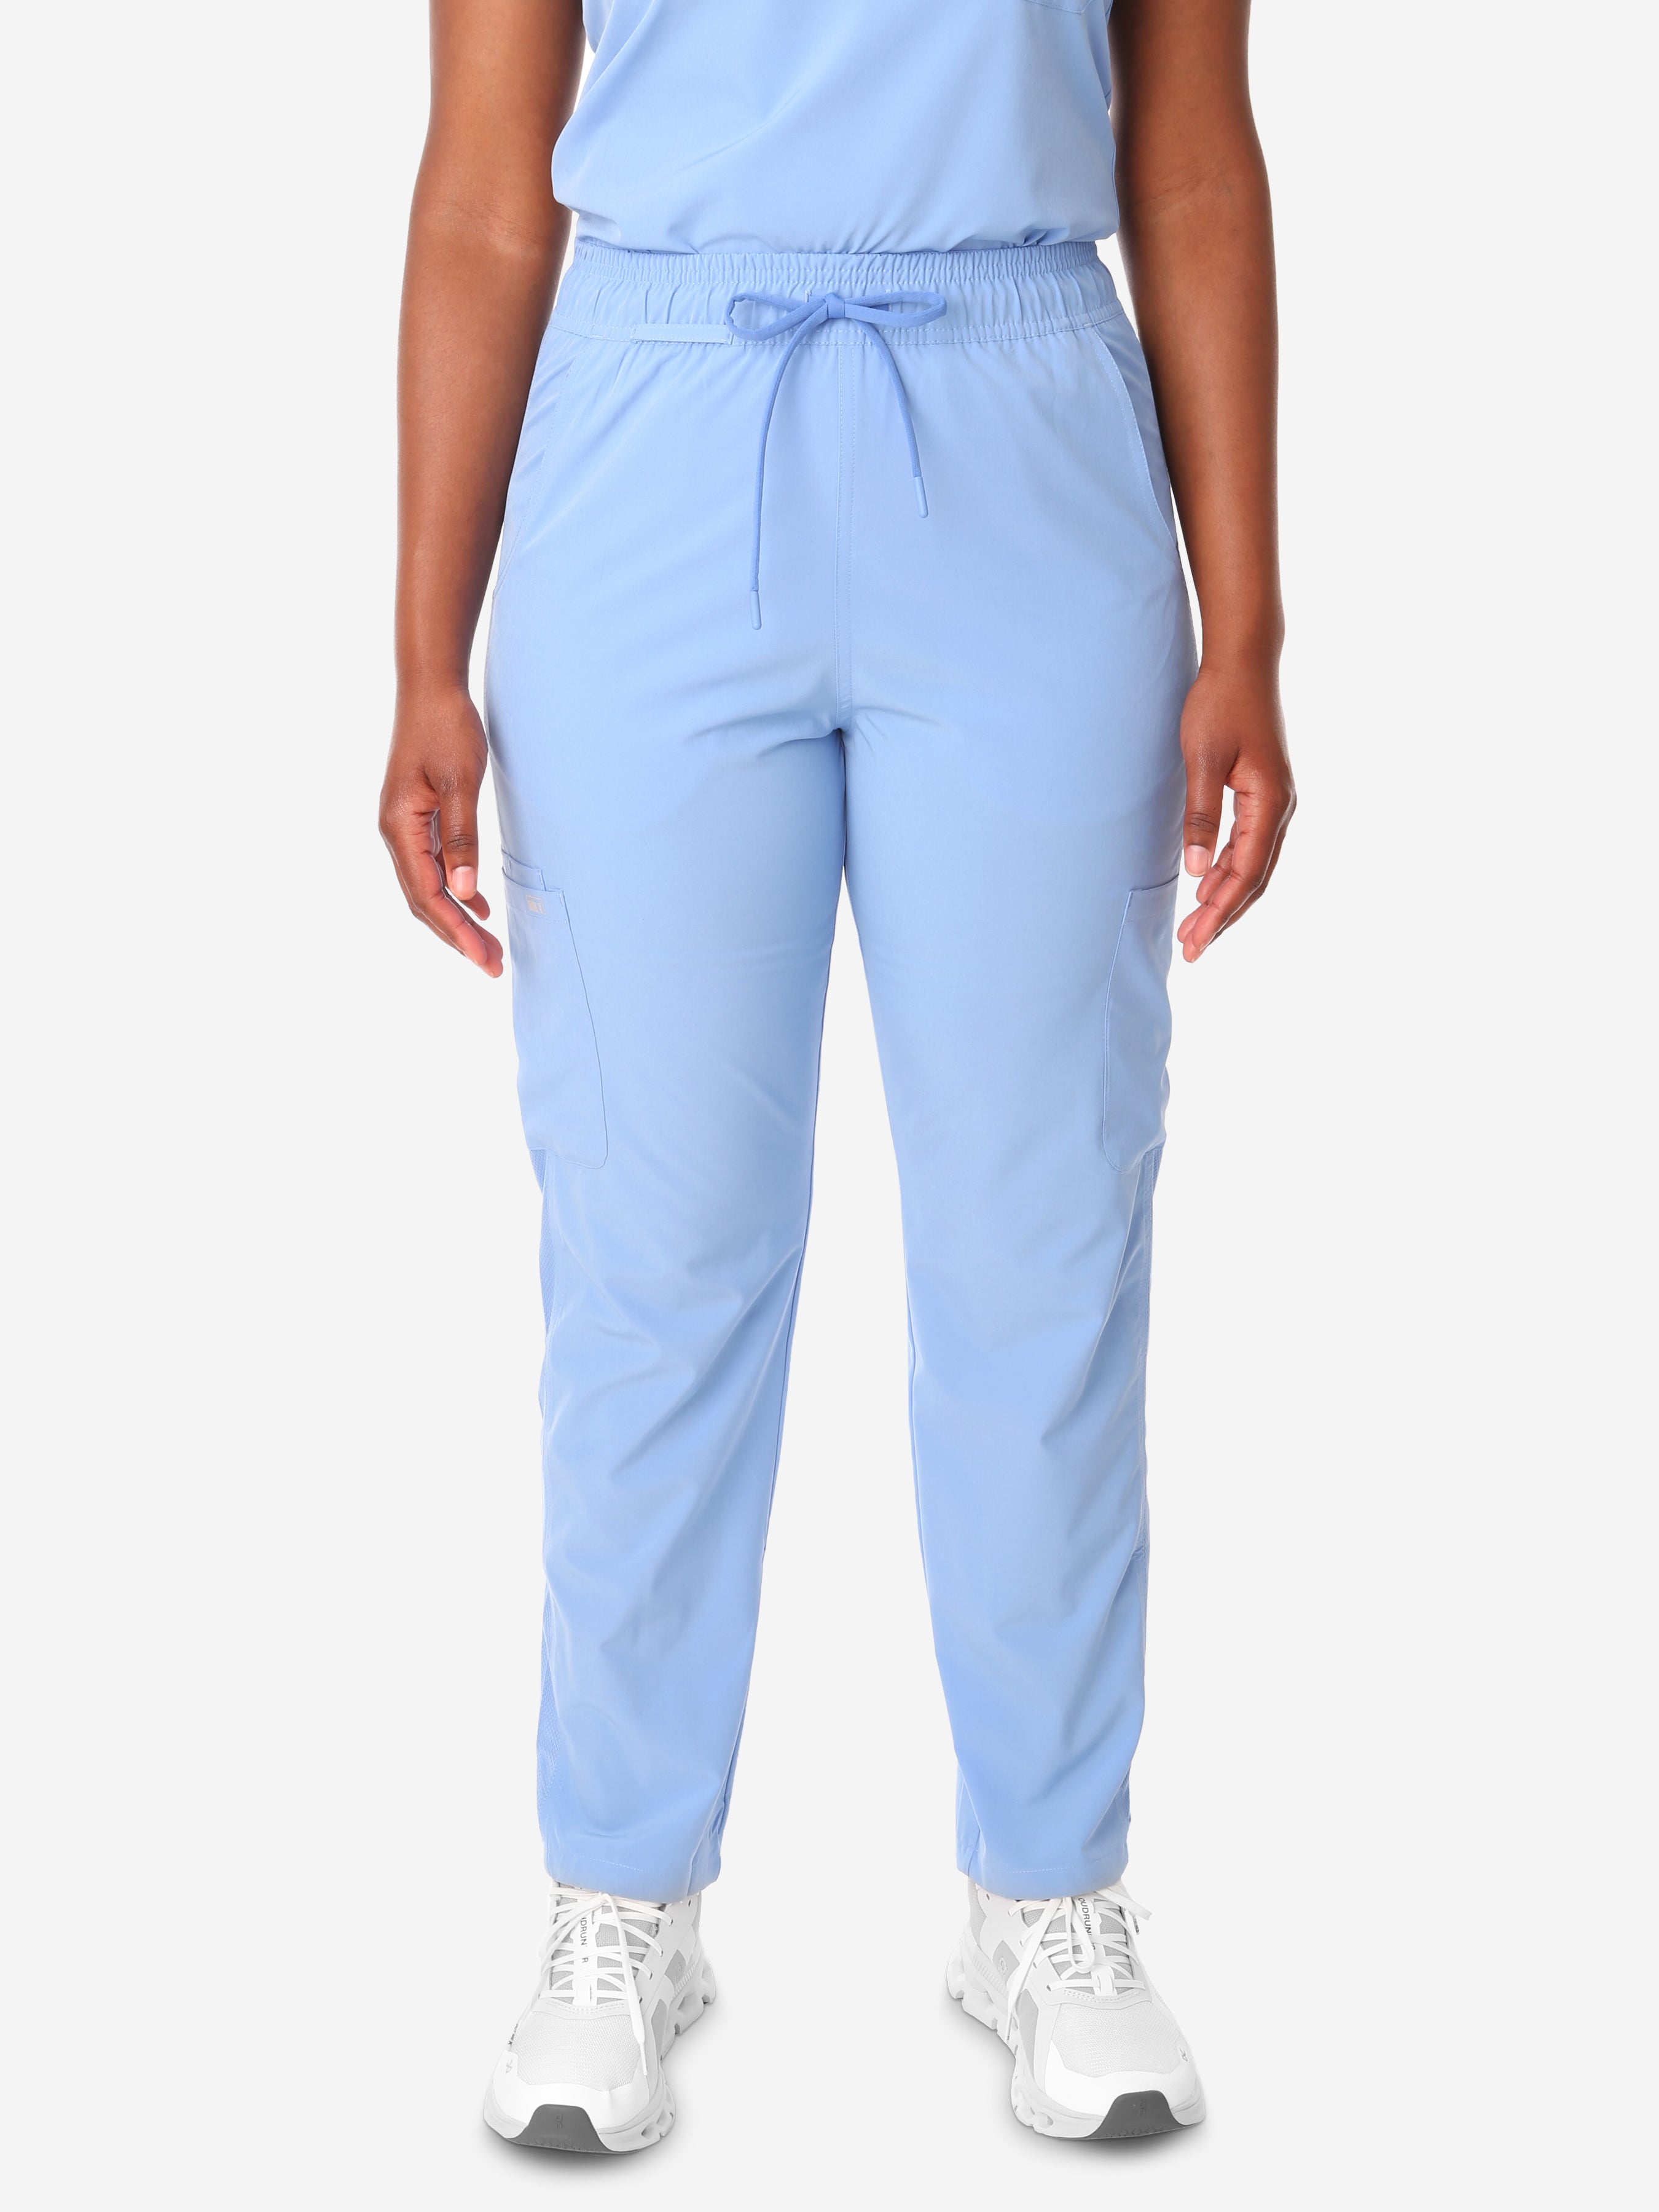 TiScrubs Ceil Blue Women&#39;s Stretch 9-Pocket Pants Front View Pants Only